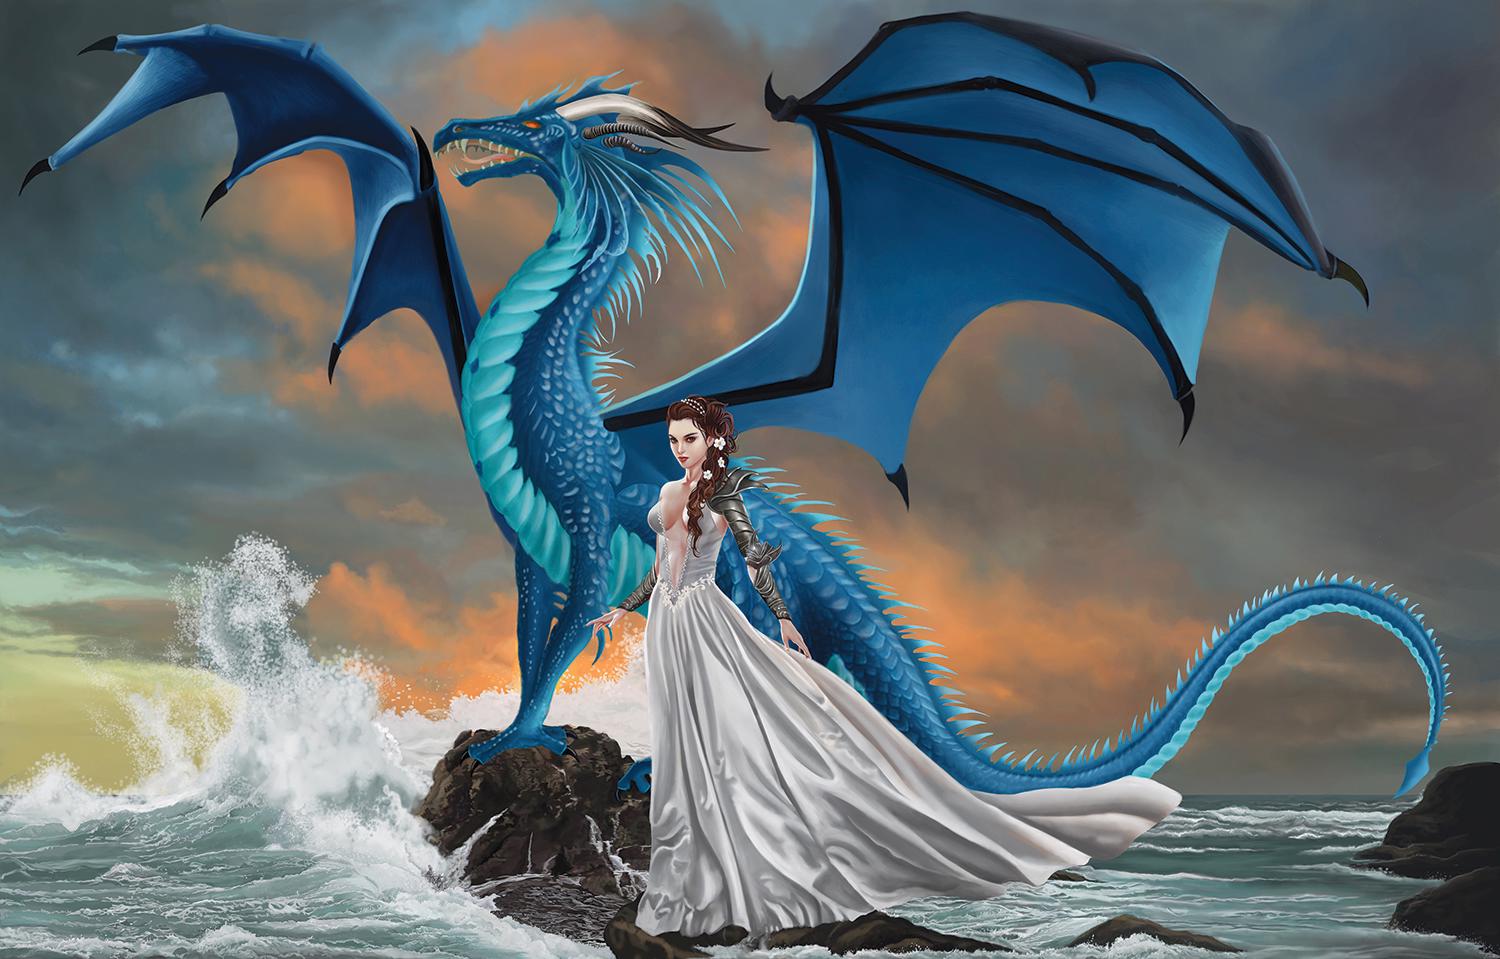 Nené Thomas: Water Dragon